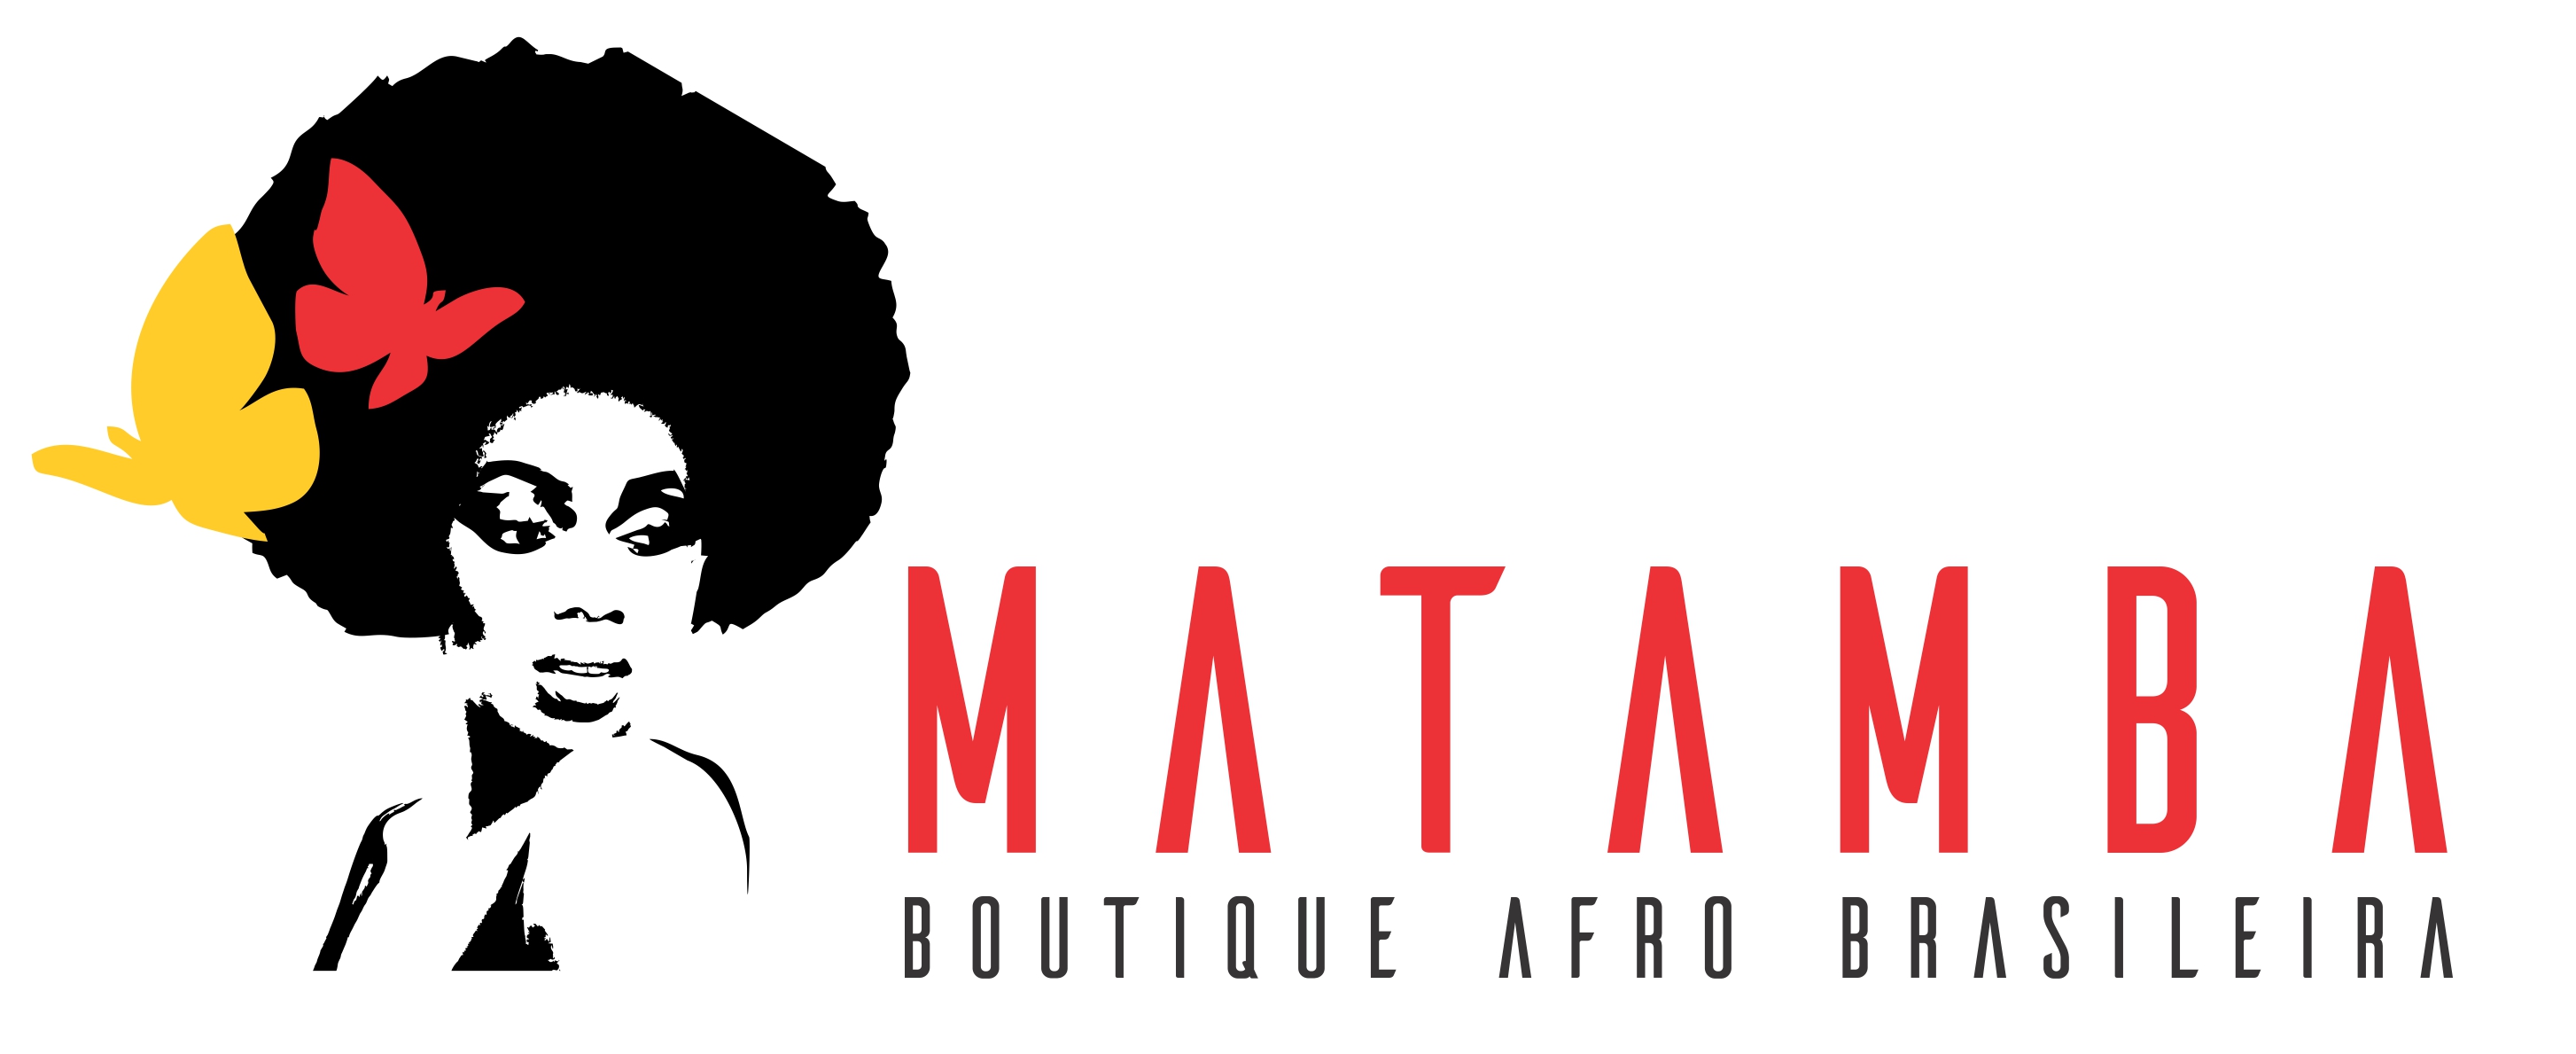 marca_matamba boutique